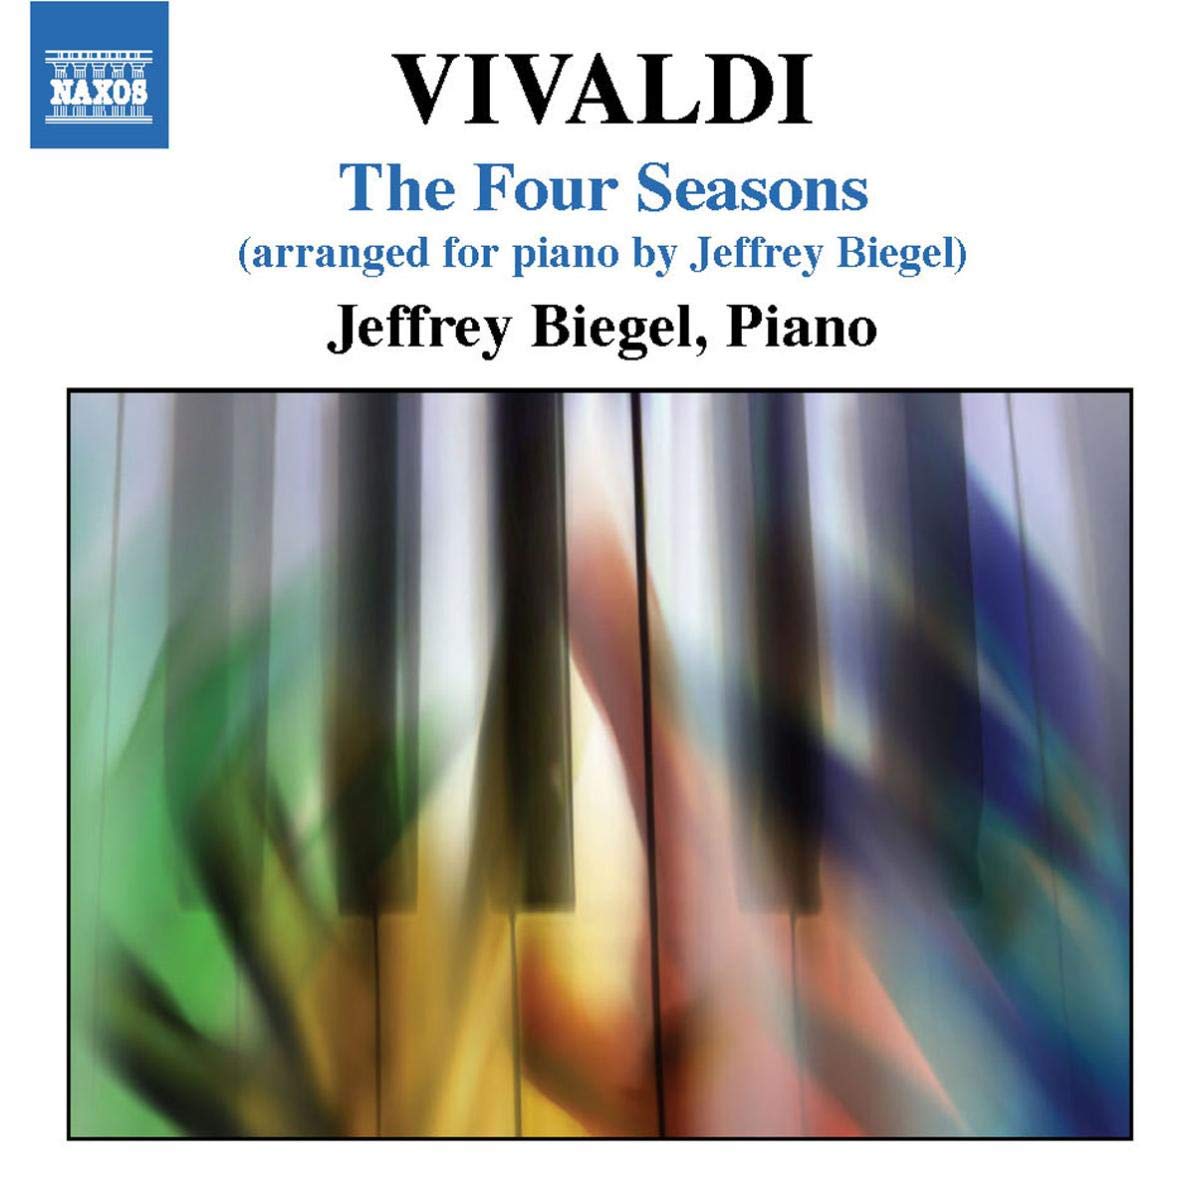 VIVALDI: The Four Seasons, arranger for piano